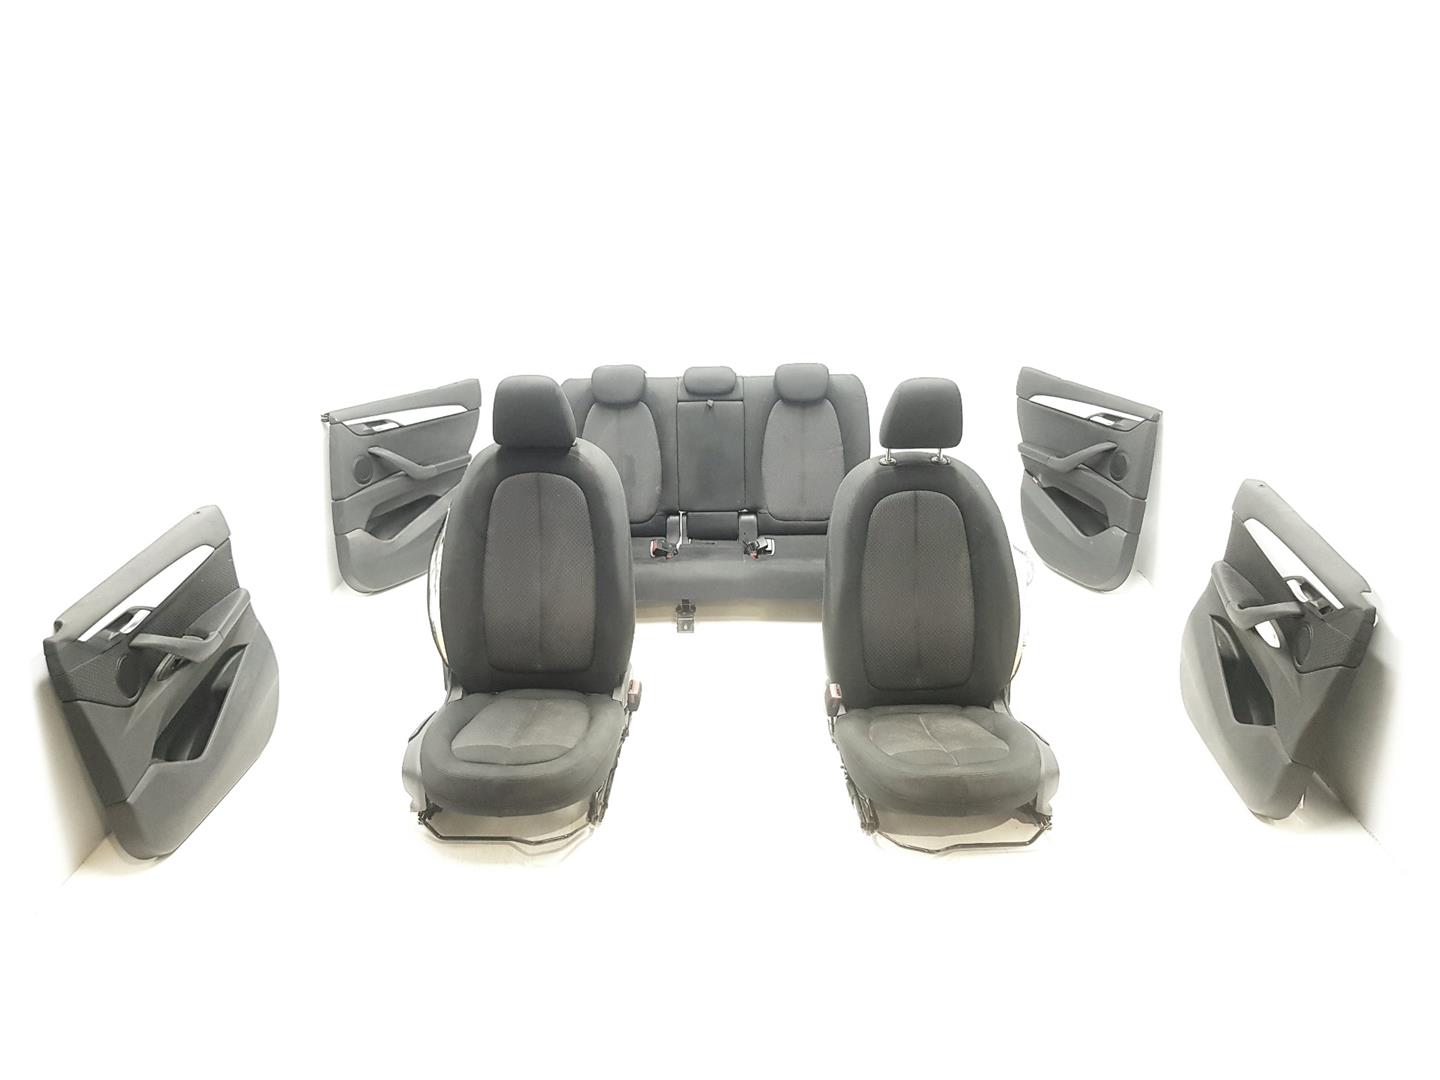 BMW X1 F48/F49 (2015-2023) Seats ASIENTOSTELA, ASIENTOSMANUALES, CONPANELES 24132952